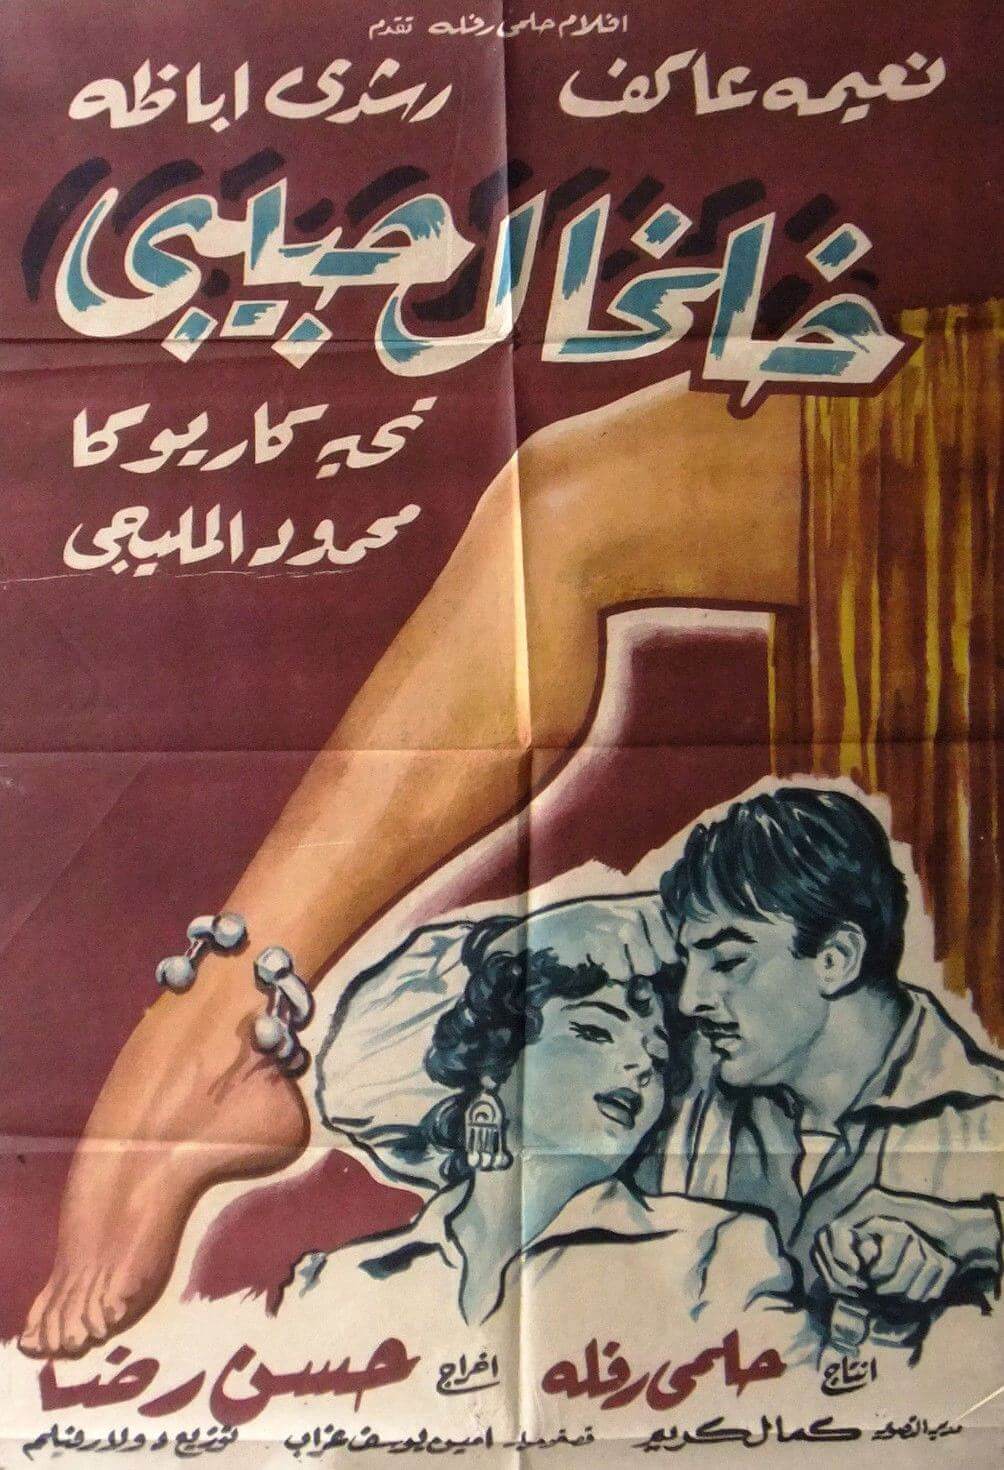 kholkhal habebi poster